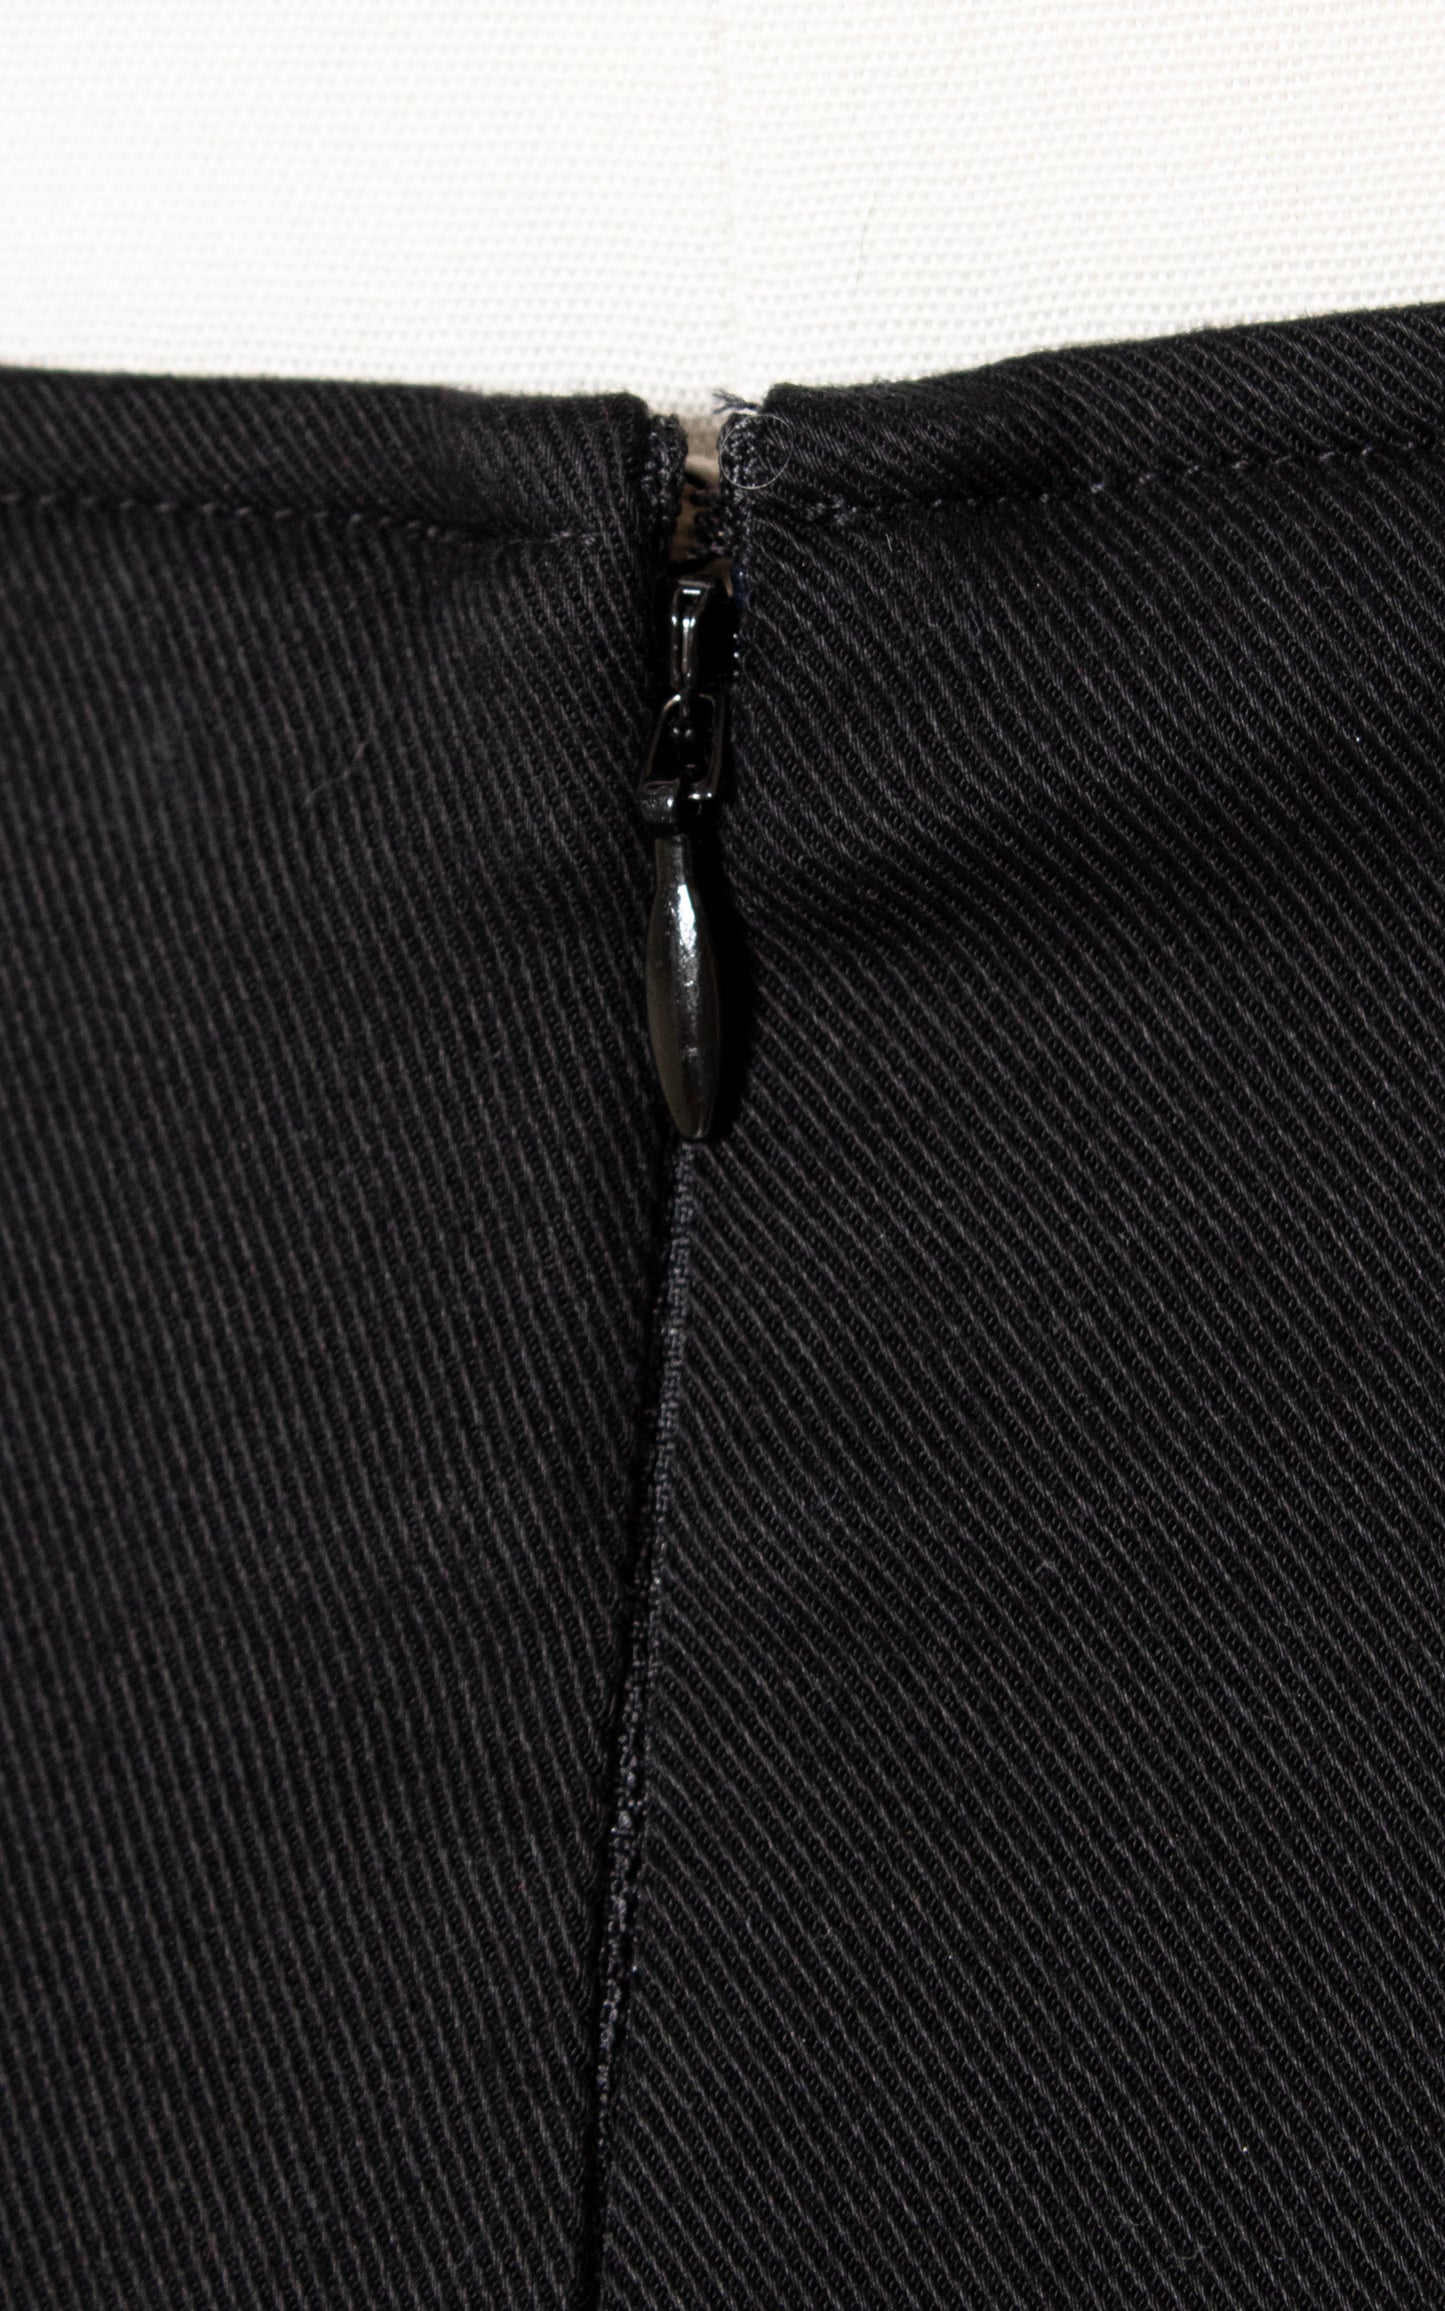 MODERN REFORMATION Black High Waist Pants | medium